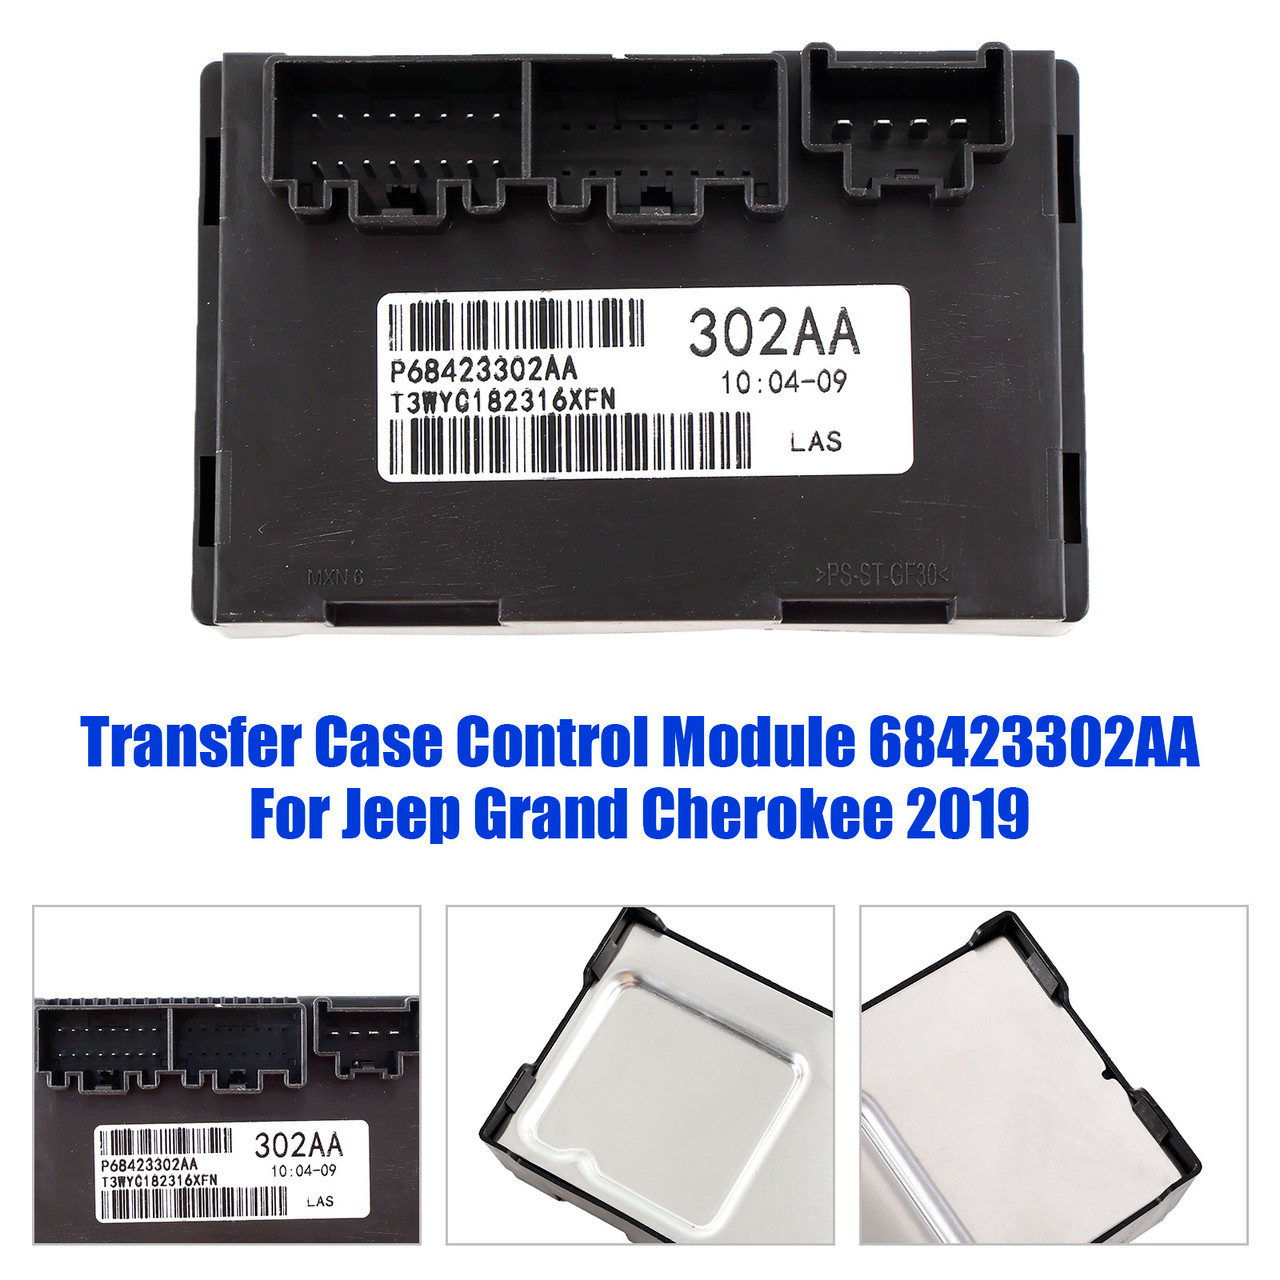 Transfer Case Control Module 68423302AA For Jeep Grand Cherokee 2019